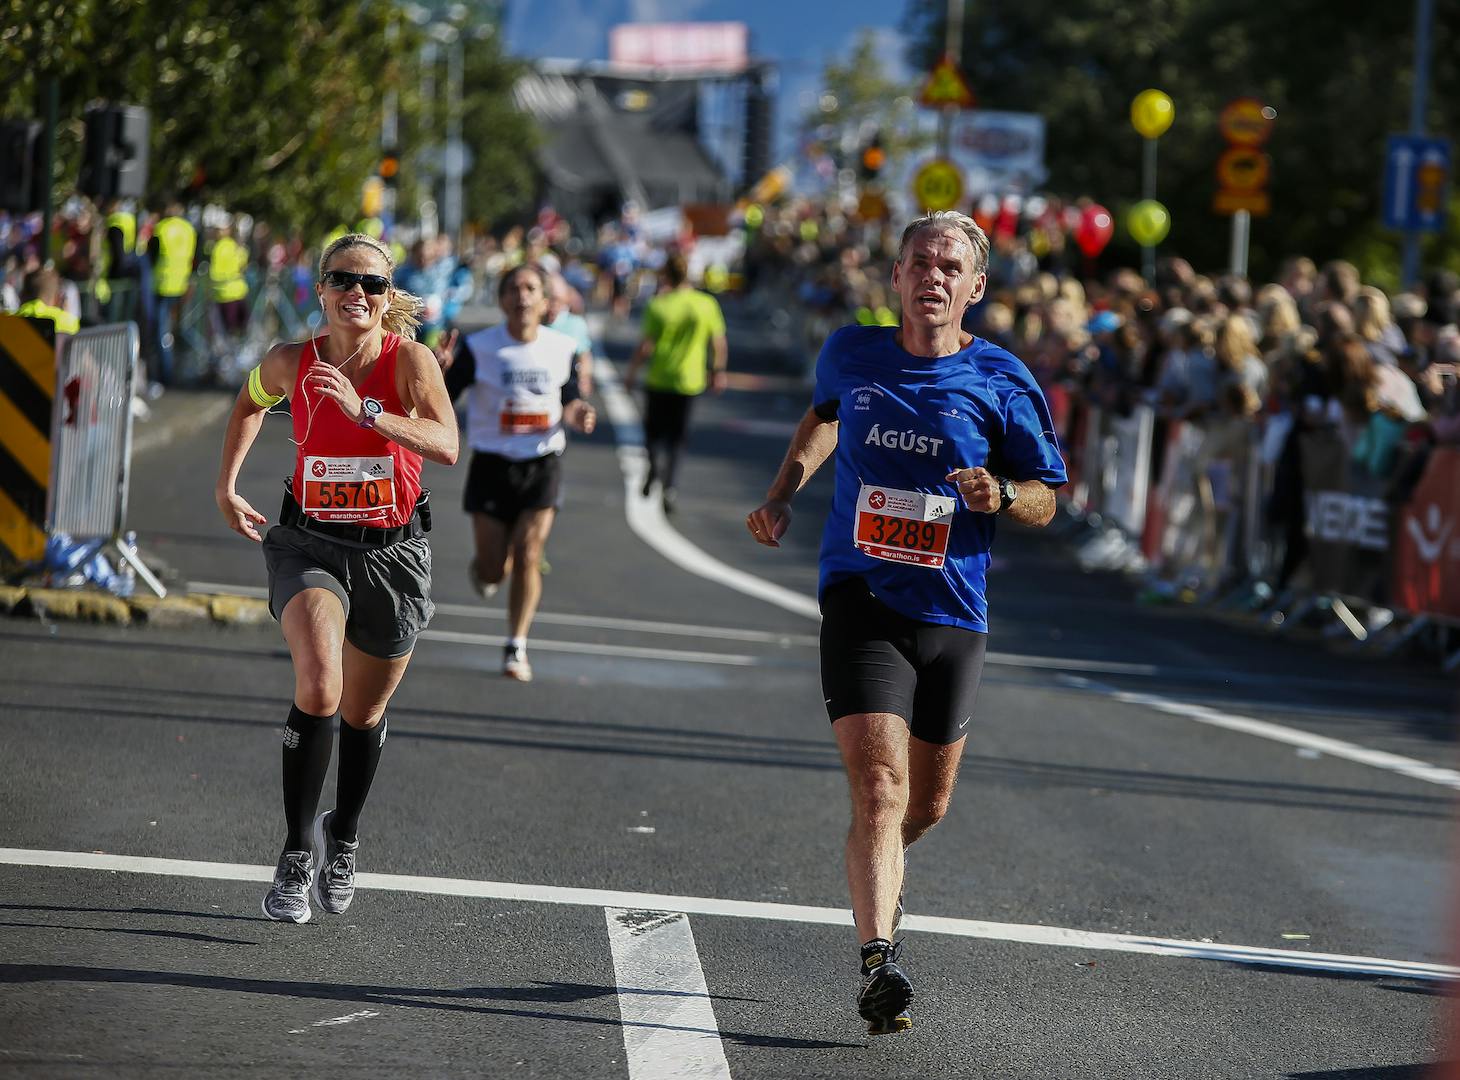 Participants finishing the race in street Lækjargata